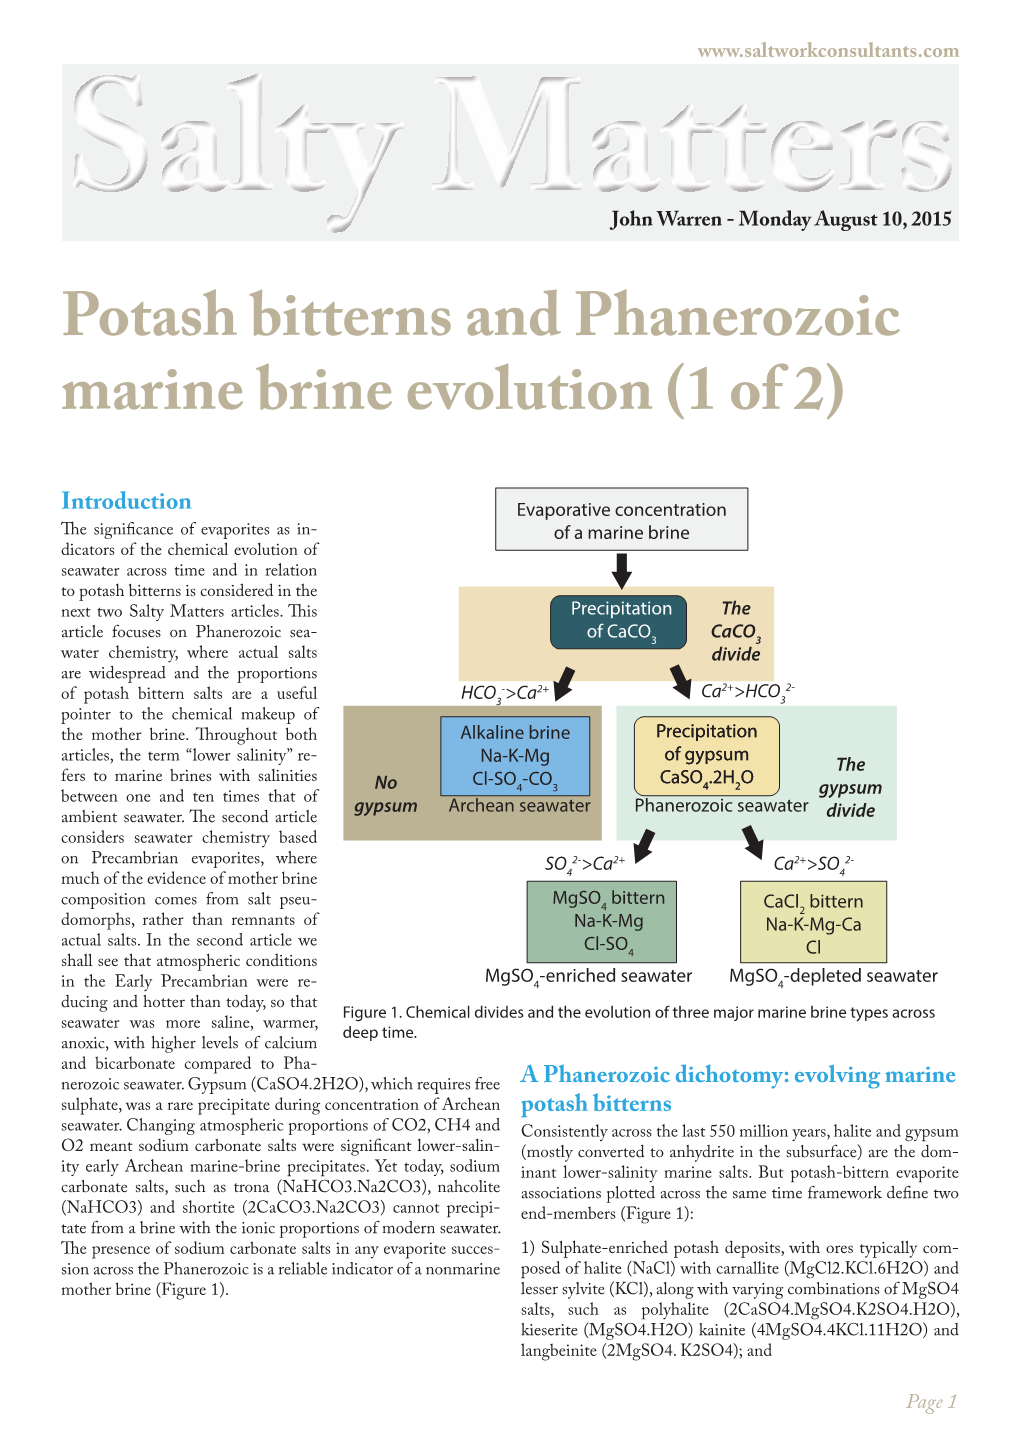 Potash Bitterns and Phanerozoic Marine Brine Evolution (1 of 2)